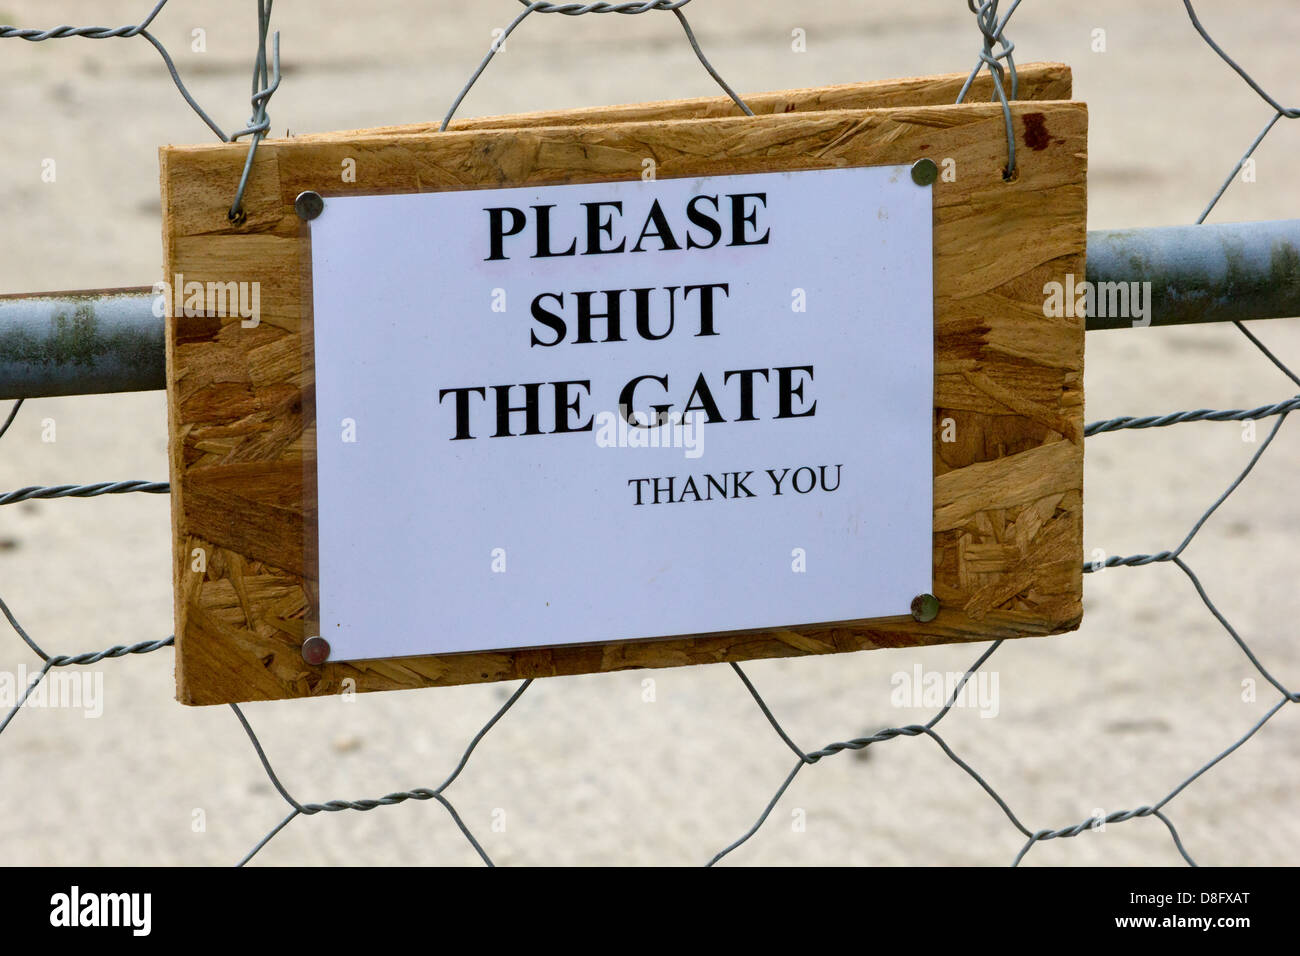 Please shut the gate sign Stock Photo